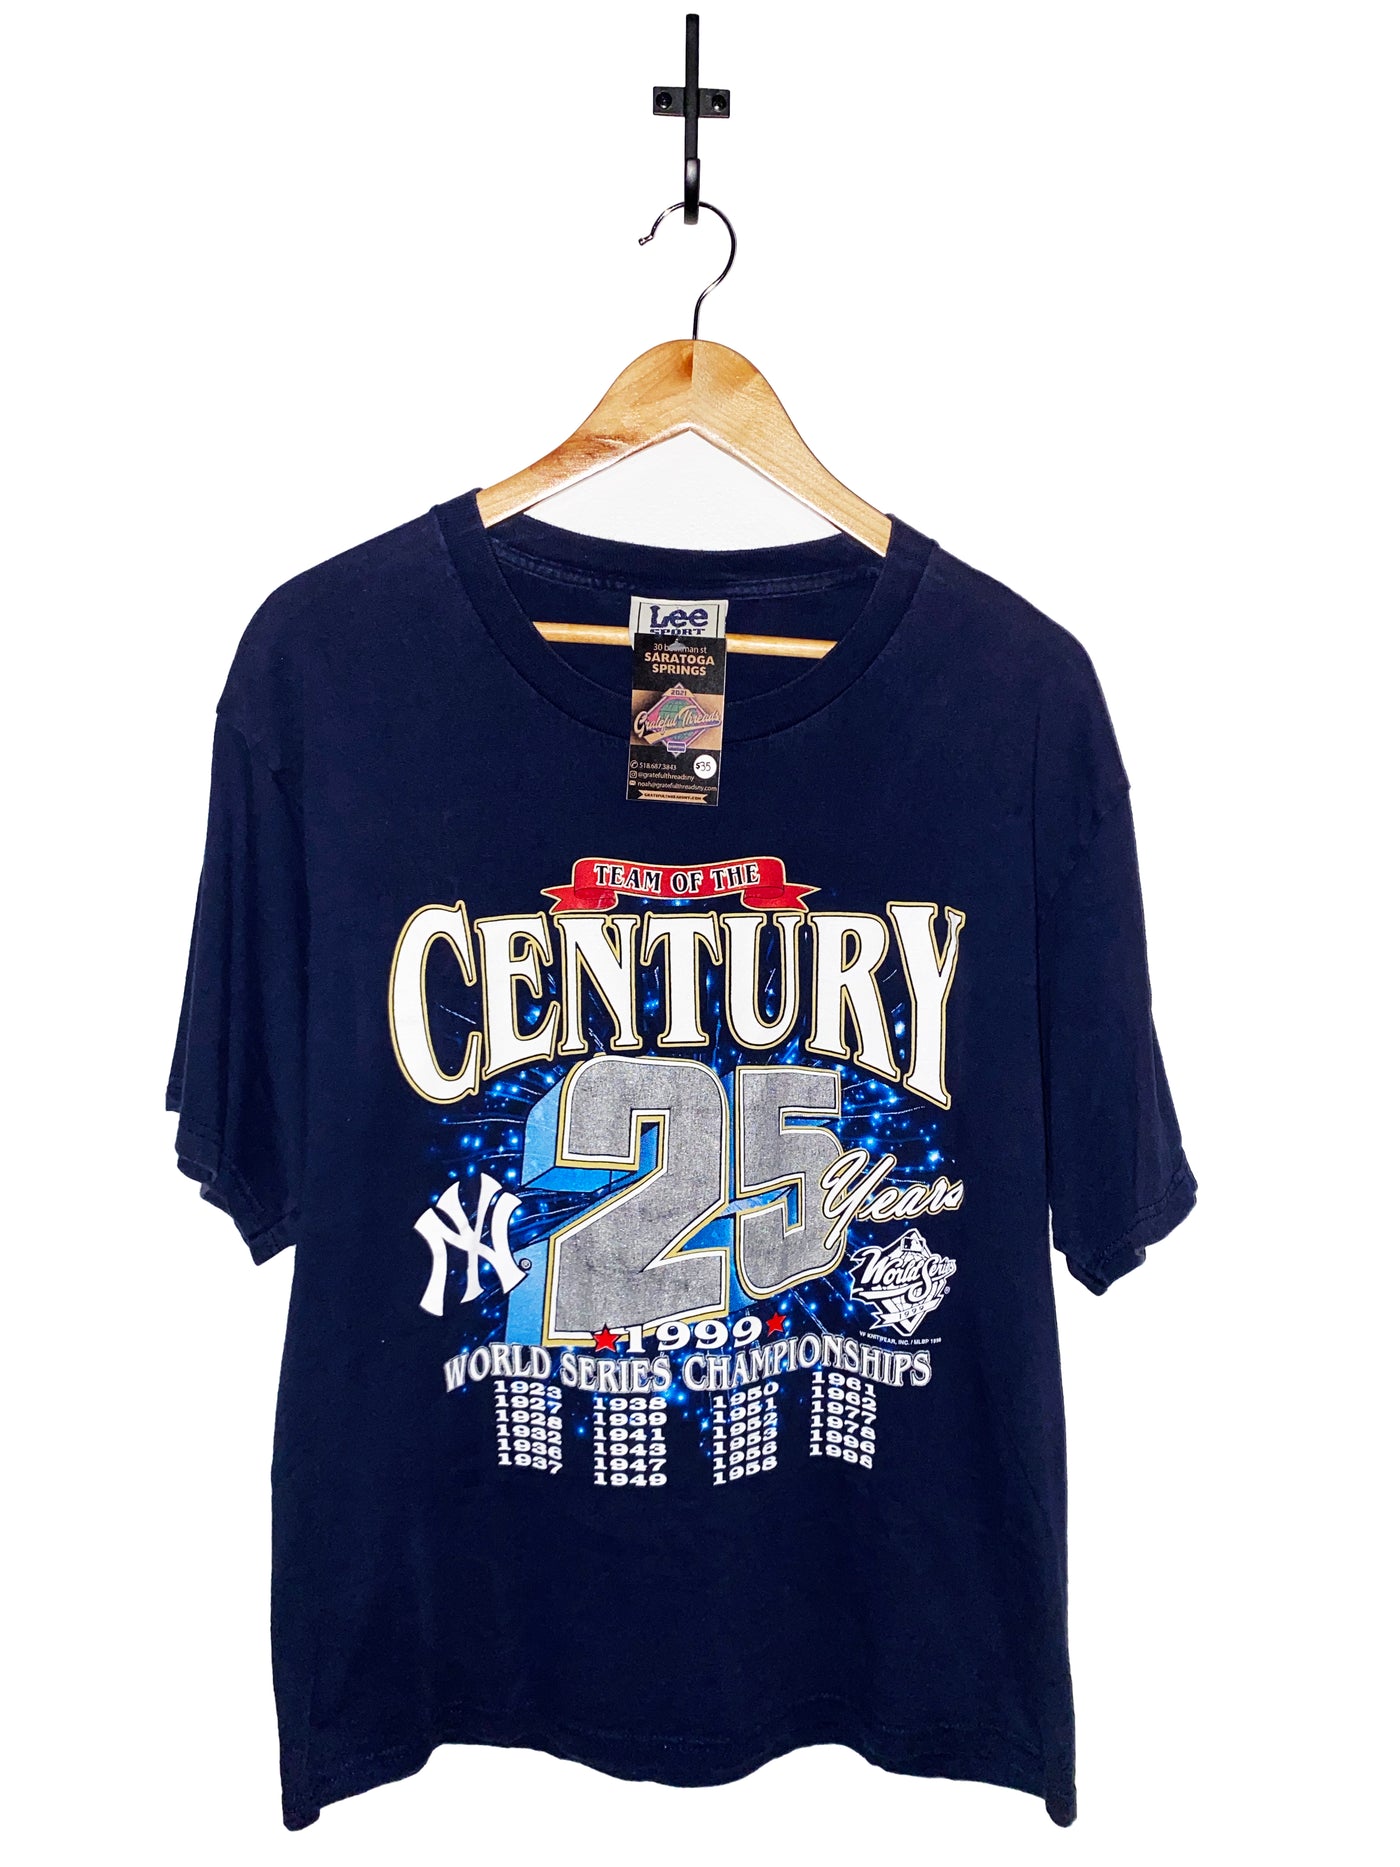 Vintage 1999 Yankees World Series Champions T-Shirt